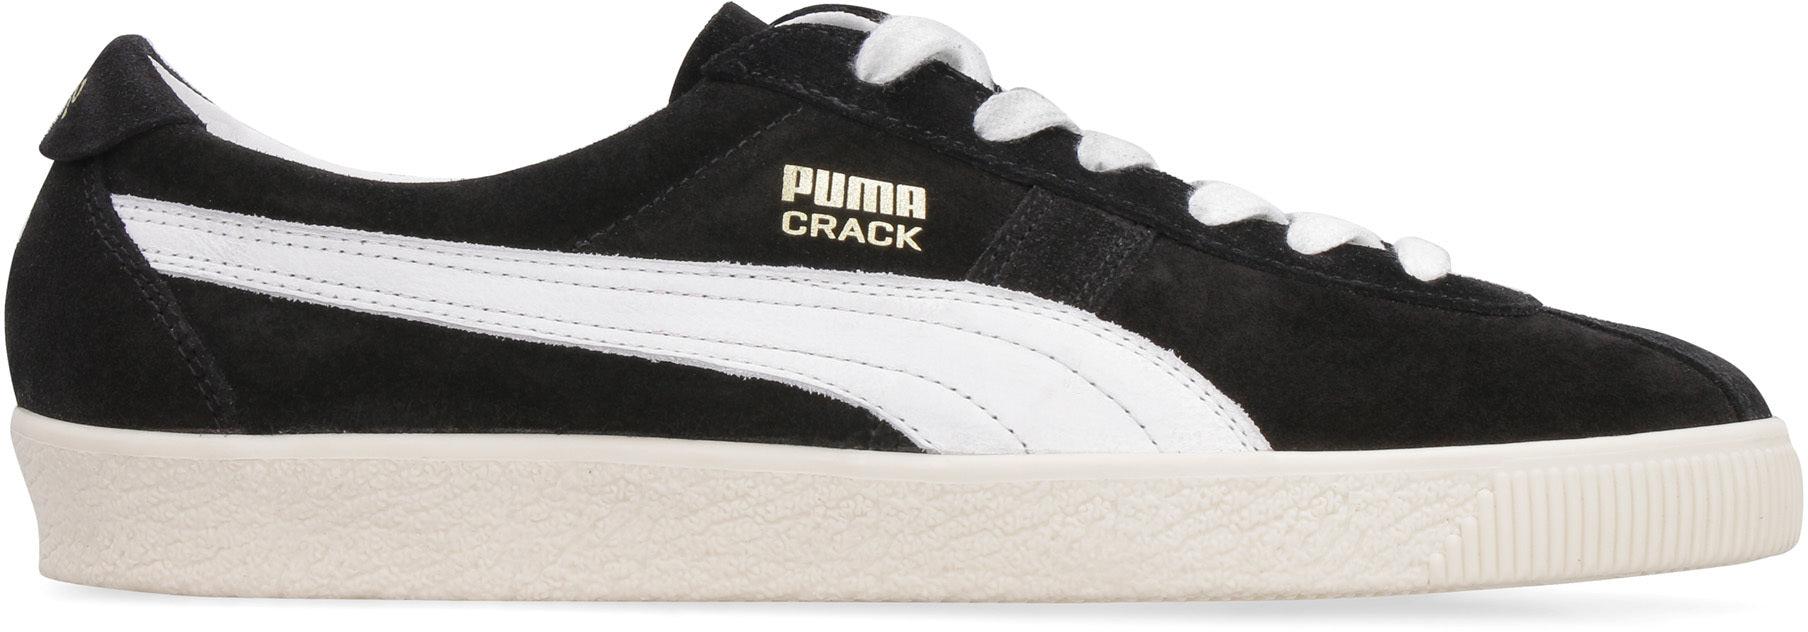 PUMA Crack Heritage Sneakers in Black for Men | Lyst